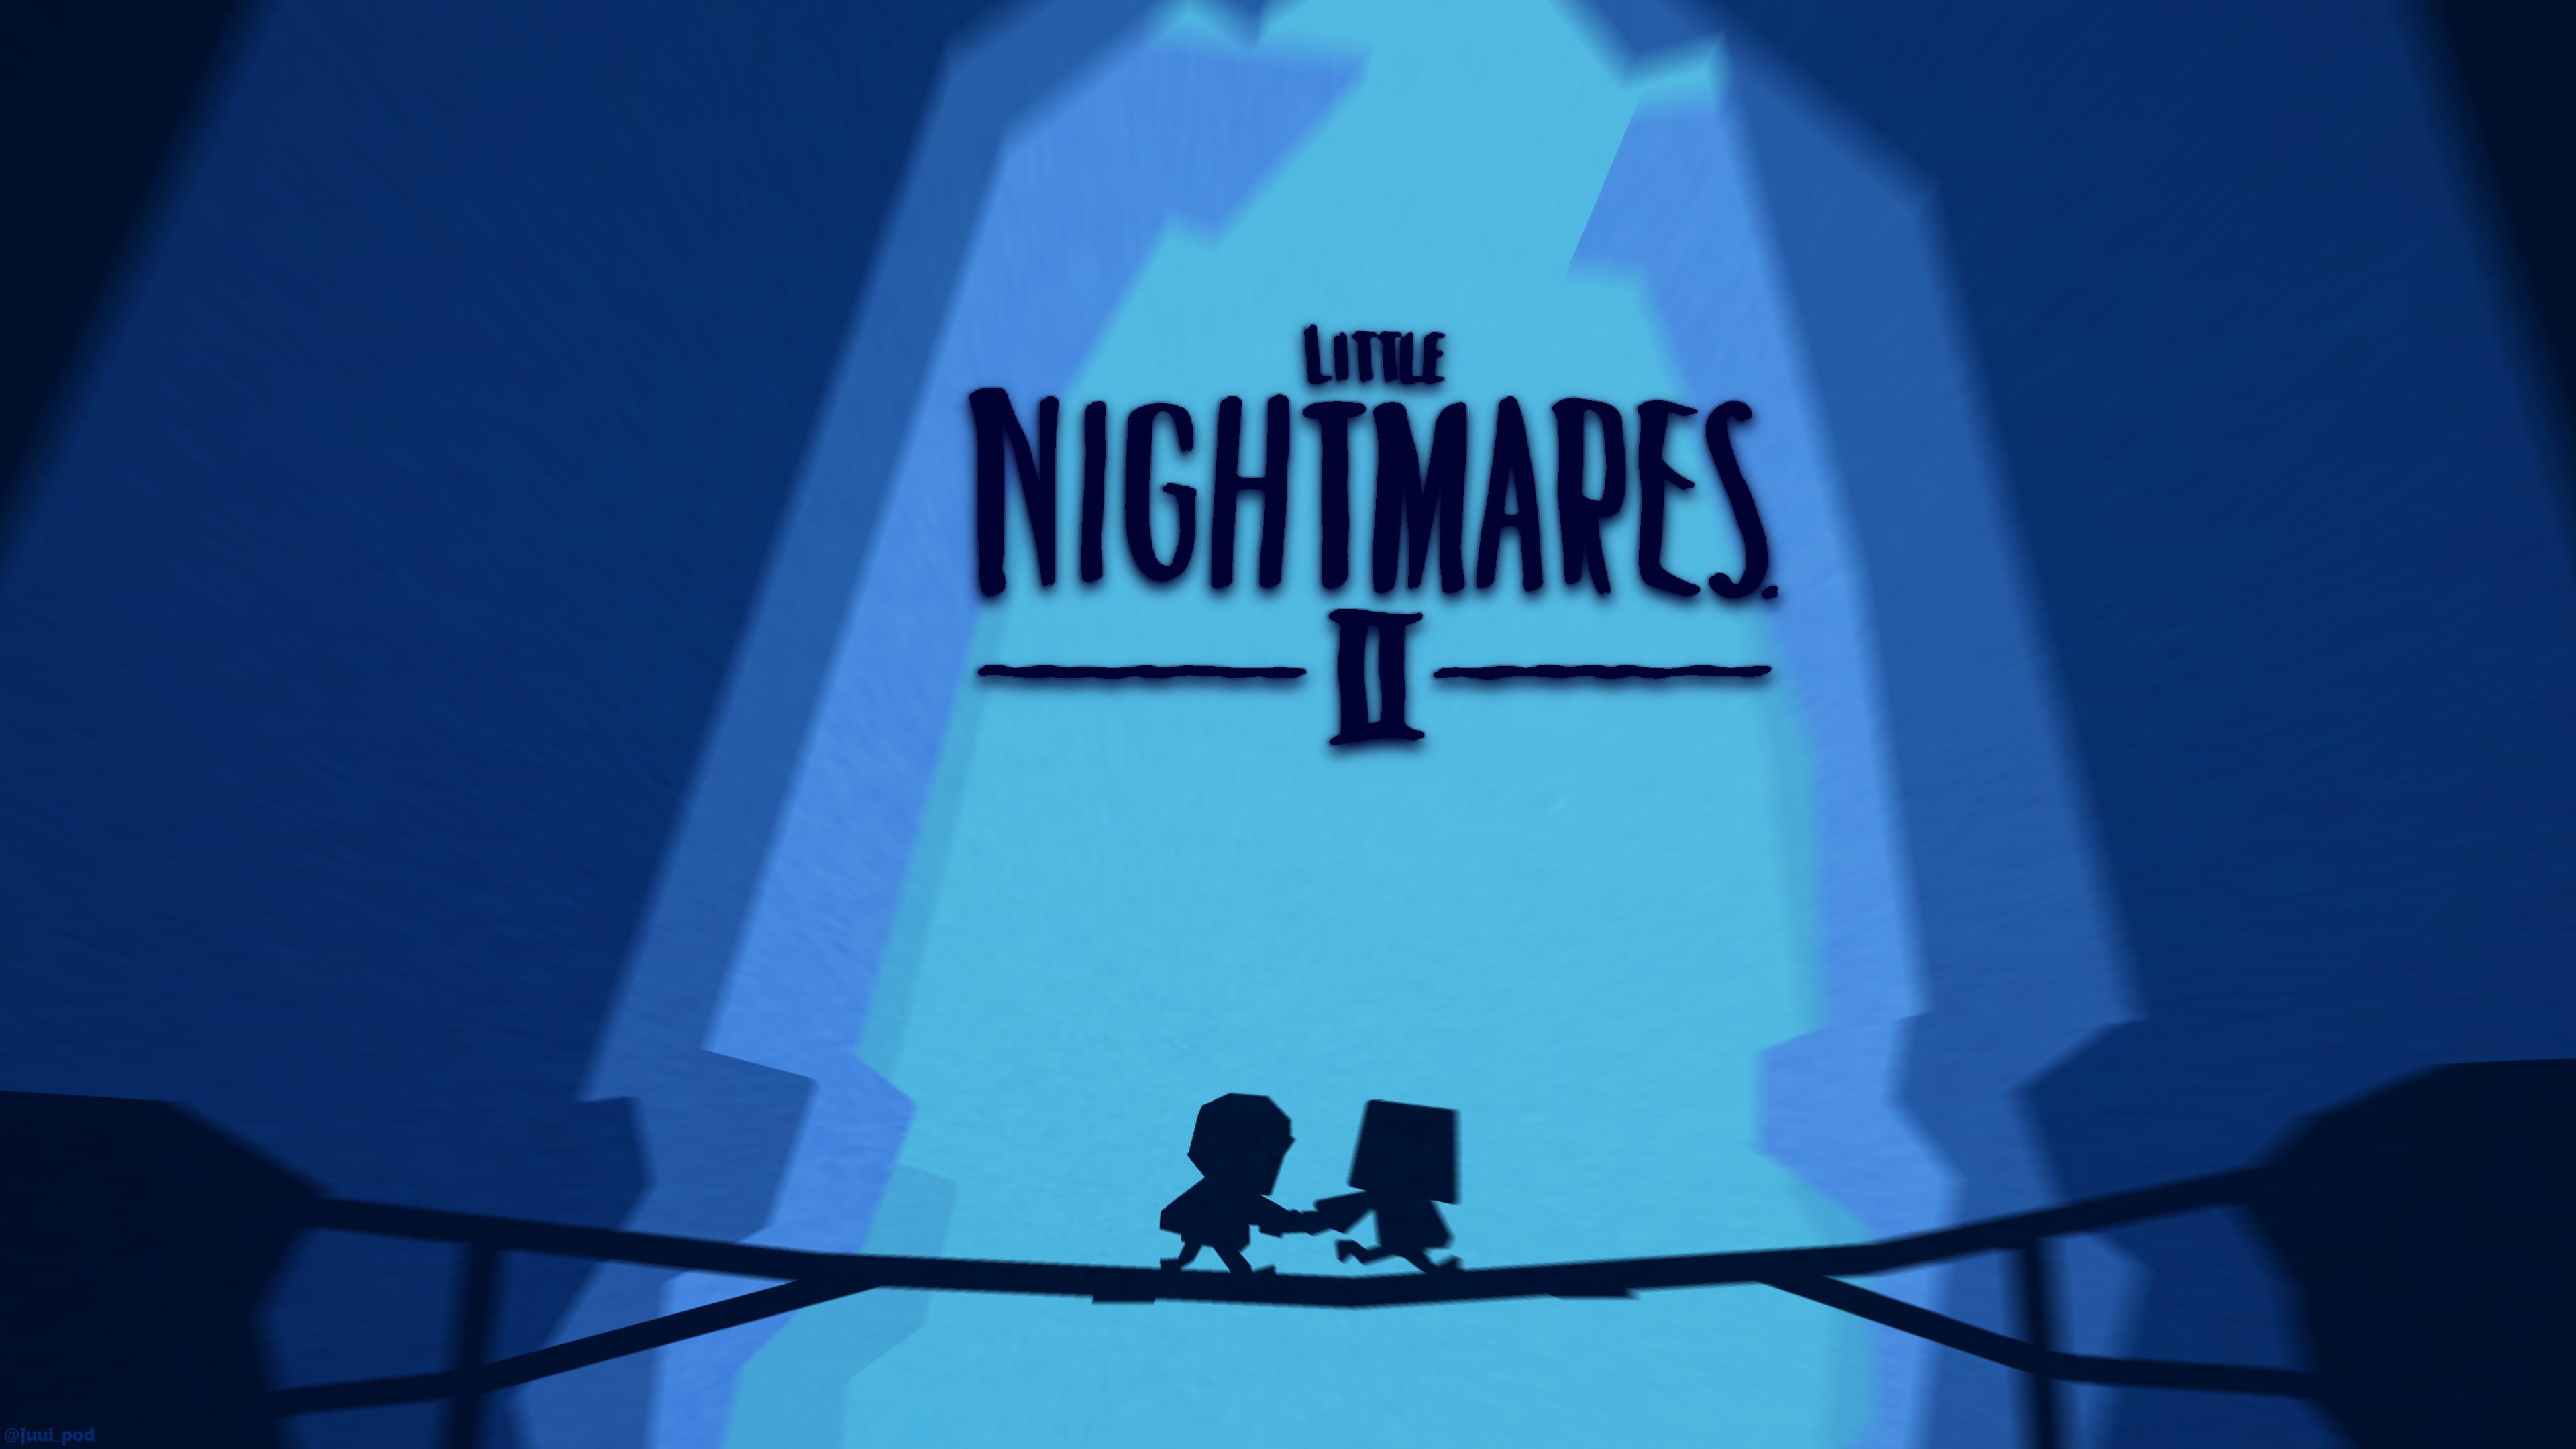 Little Nightmares 2 wallpaper by Dreamsmpfanforever - Download on ZEDGE™